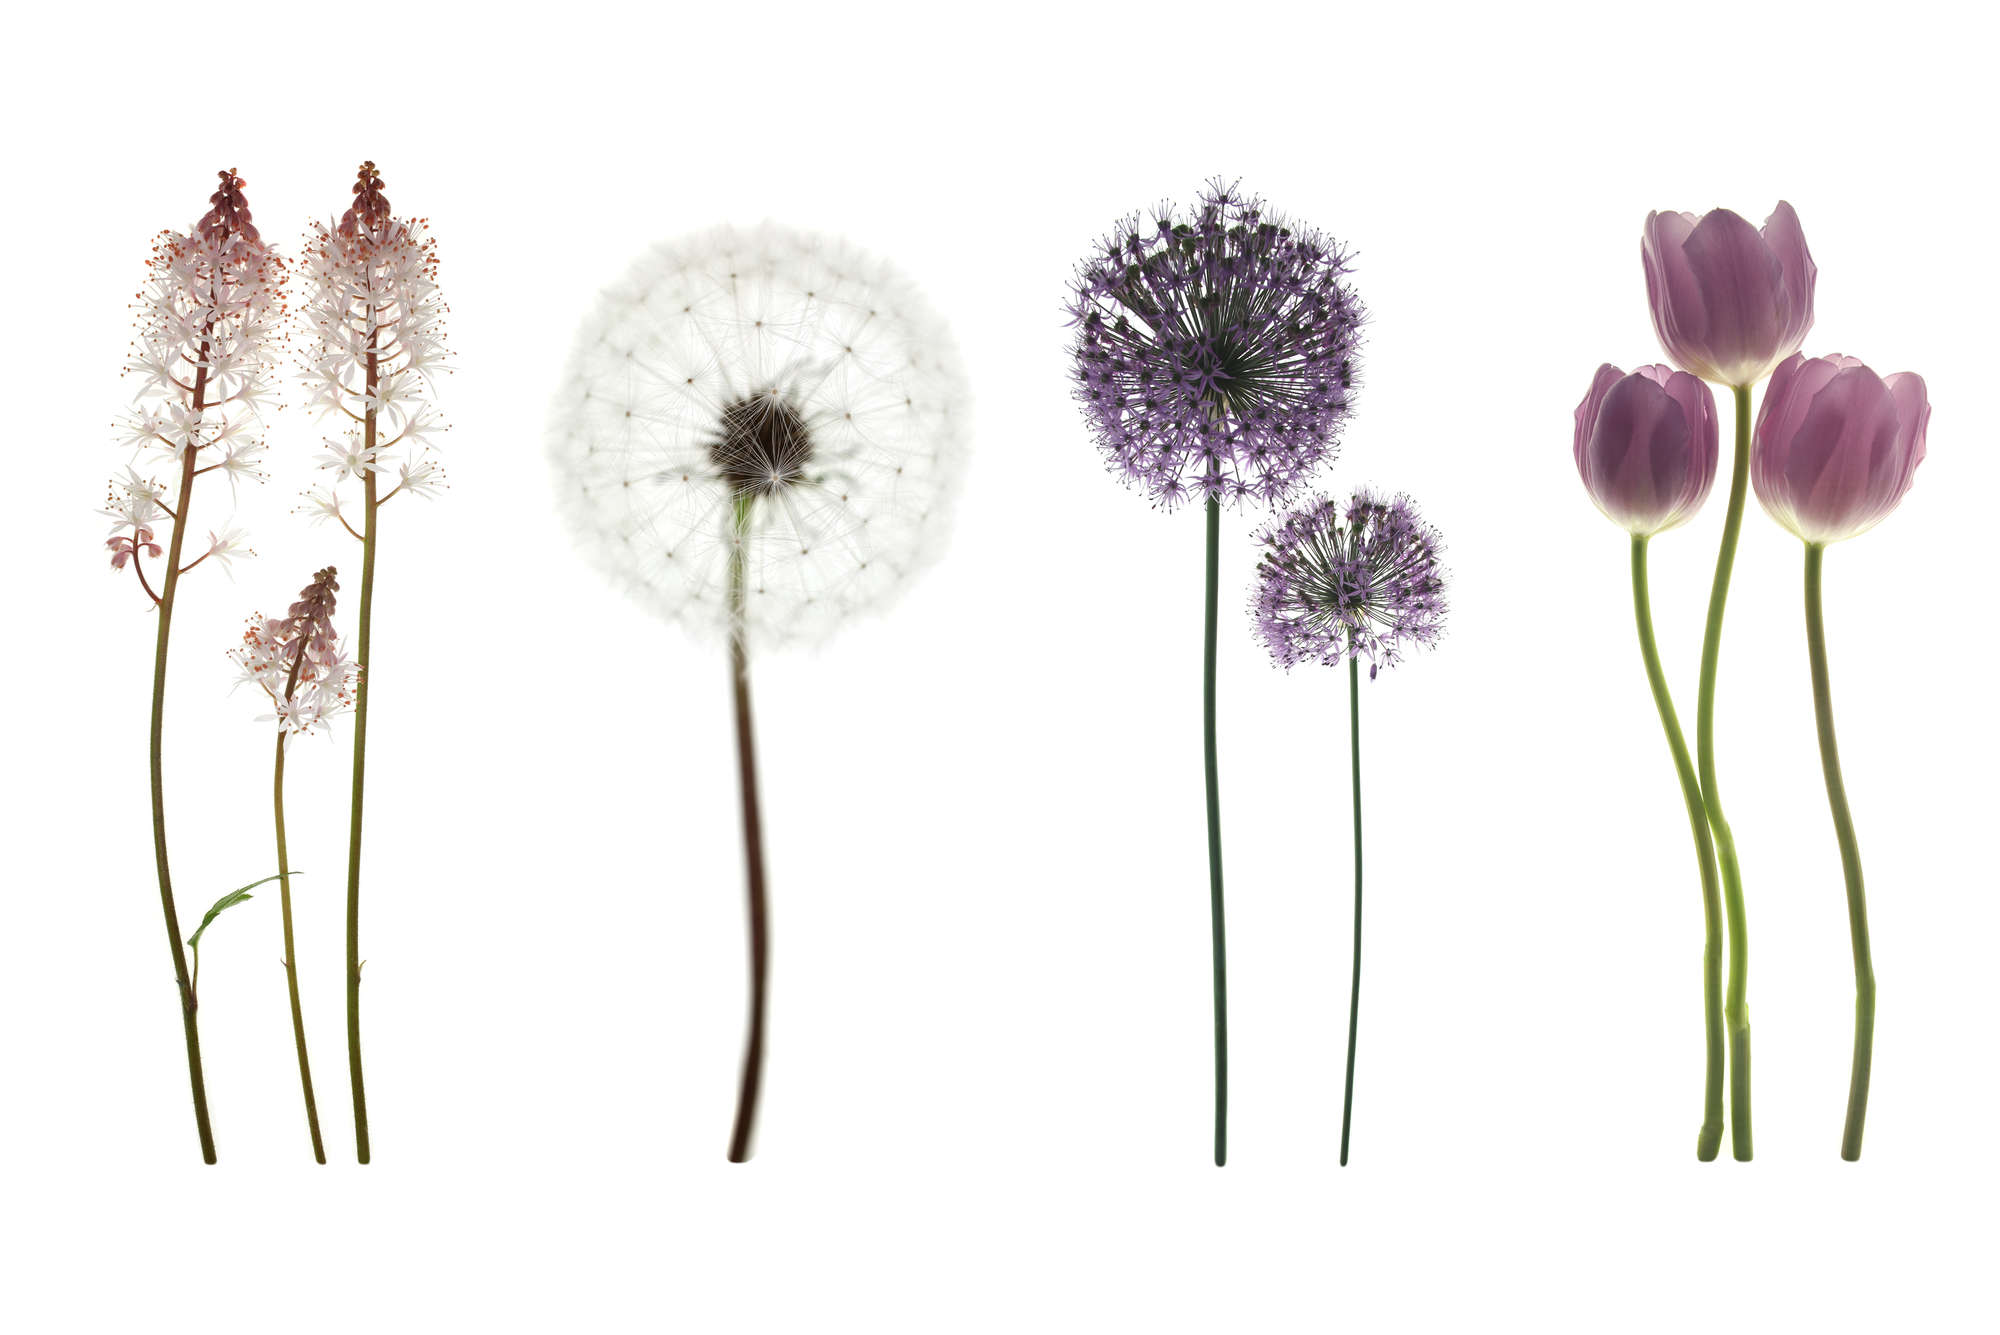             Fototapete mit Blumenvielfalt – Premium Glattvlies
        